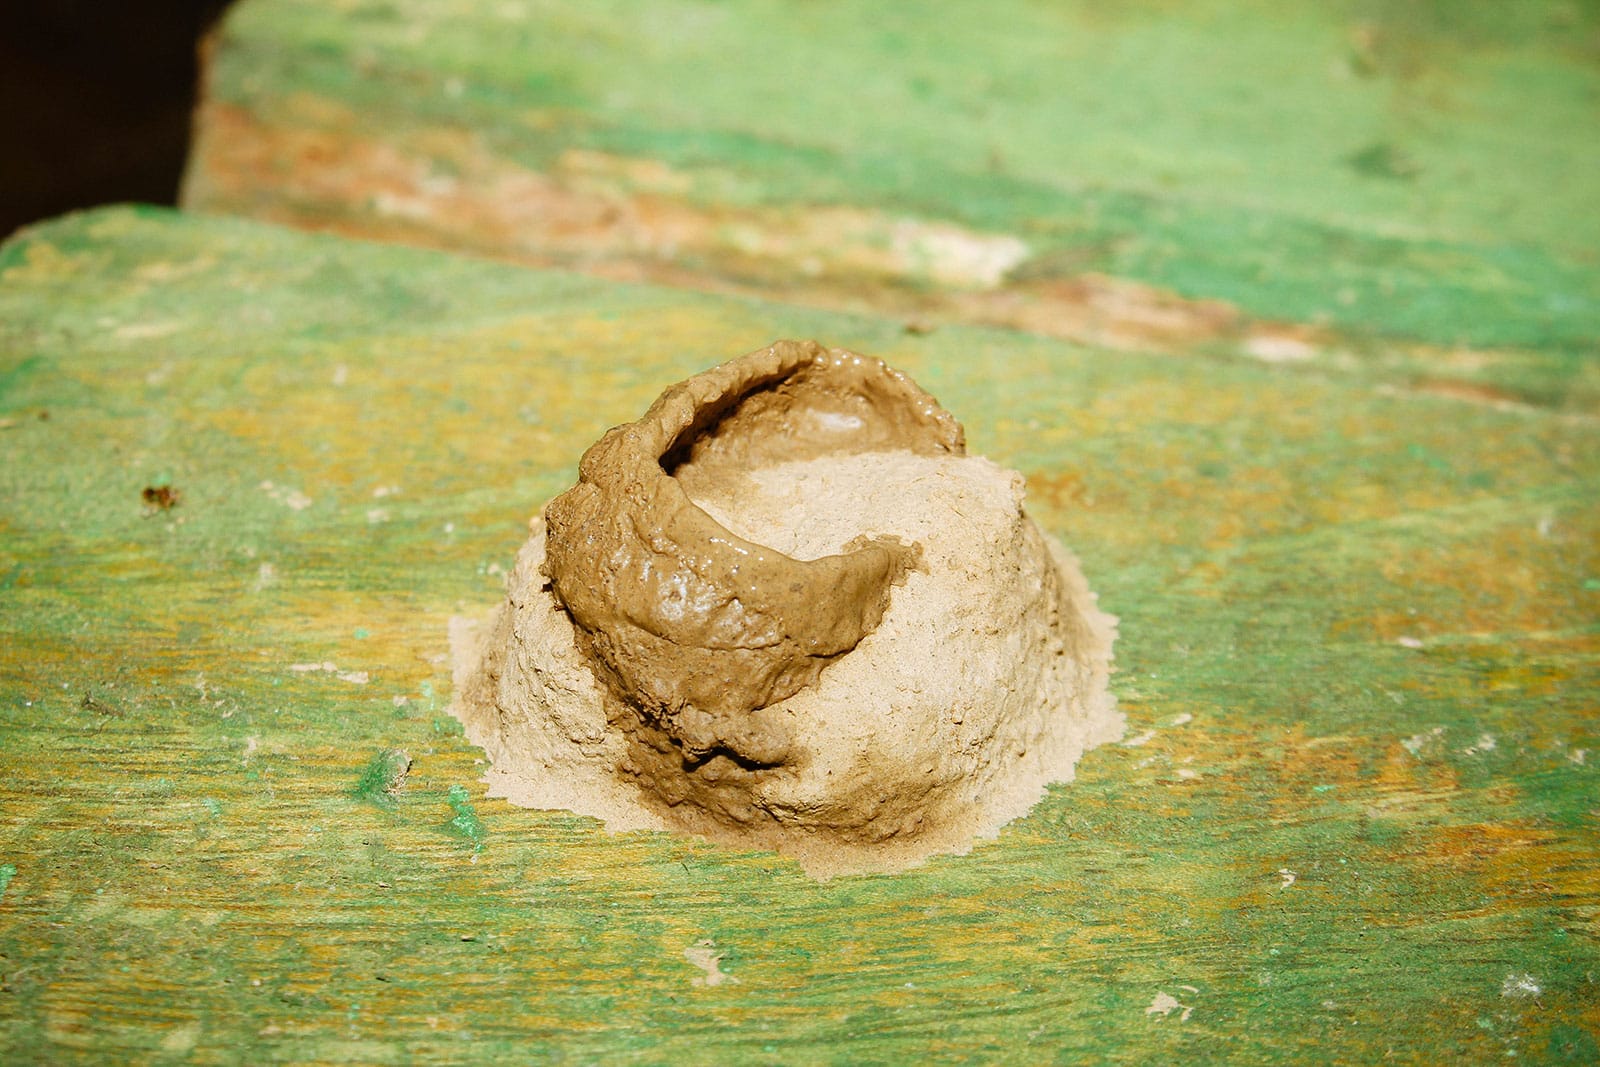 Mud dauber nest resembling a mound of dirt